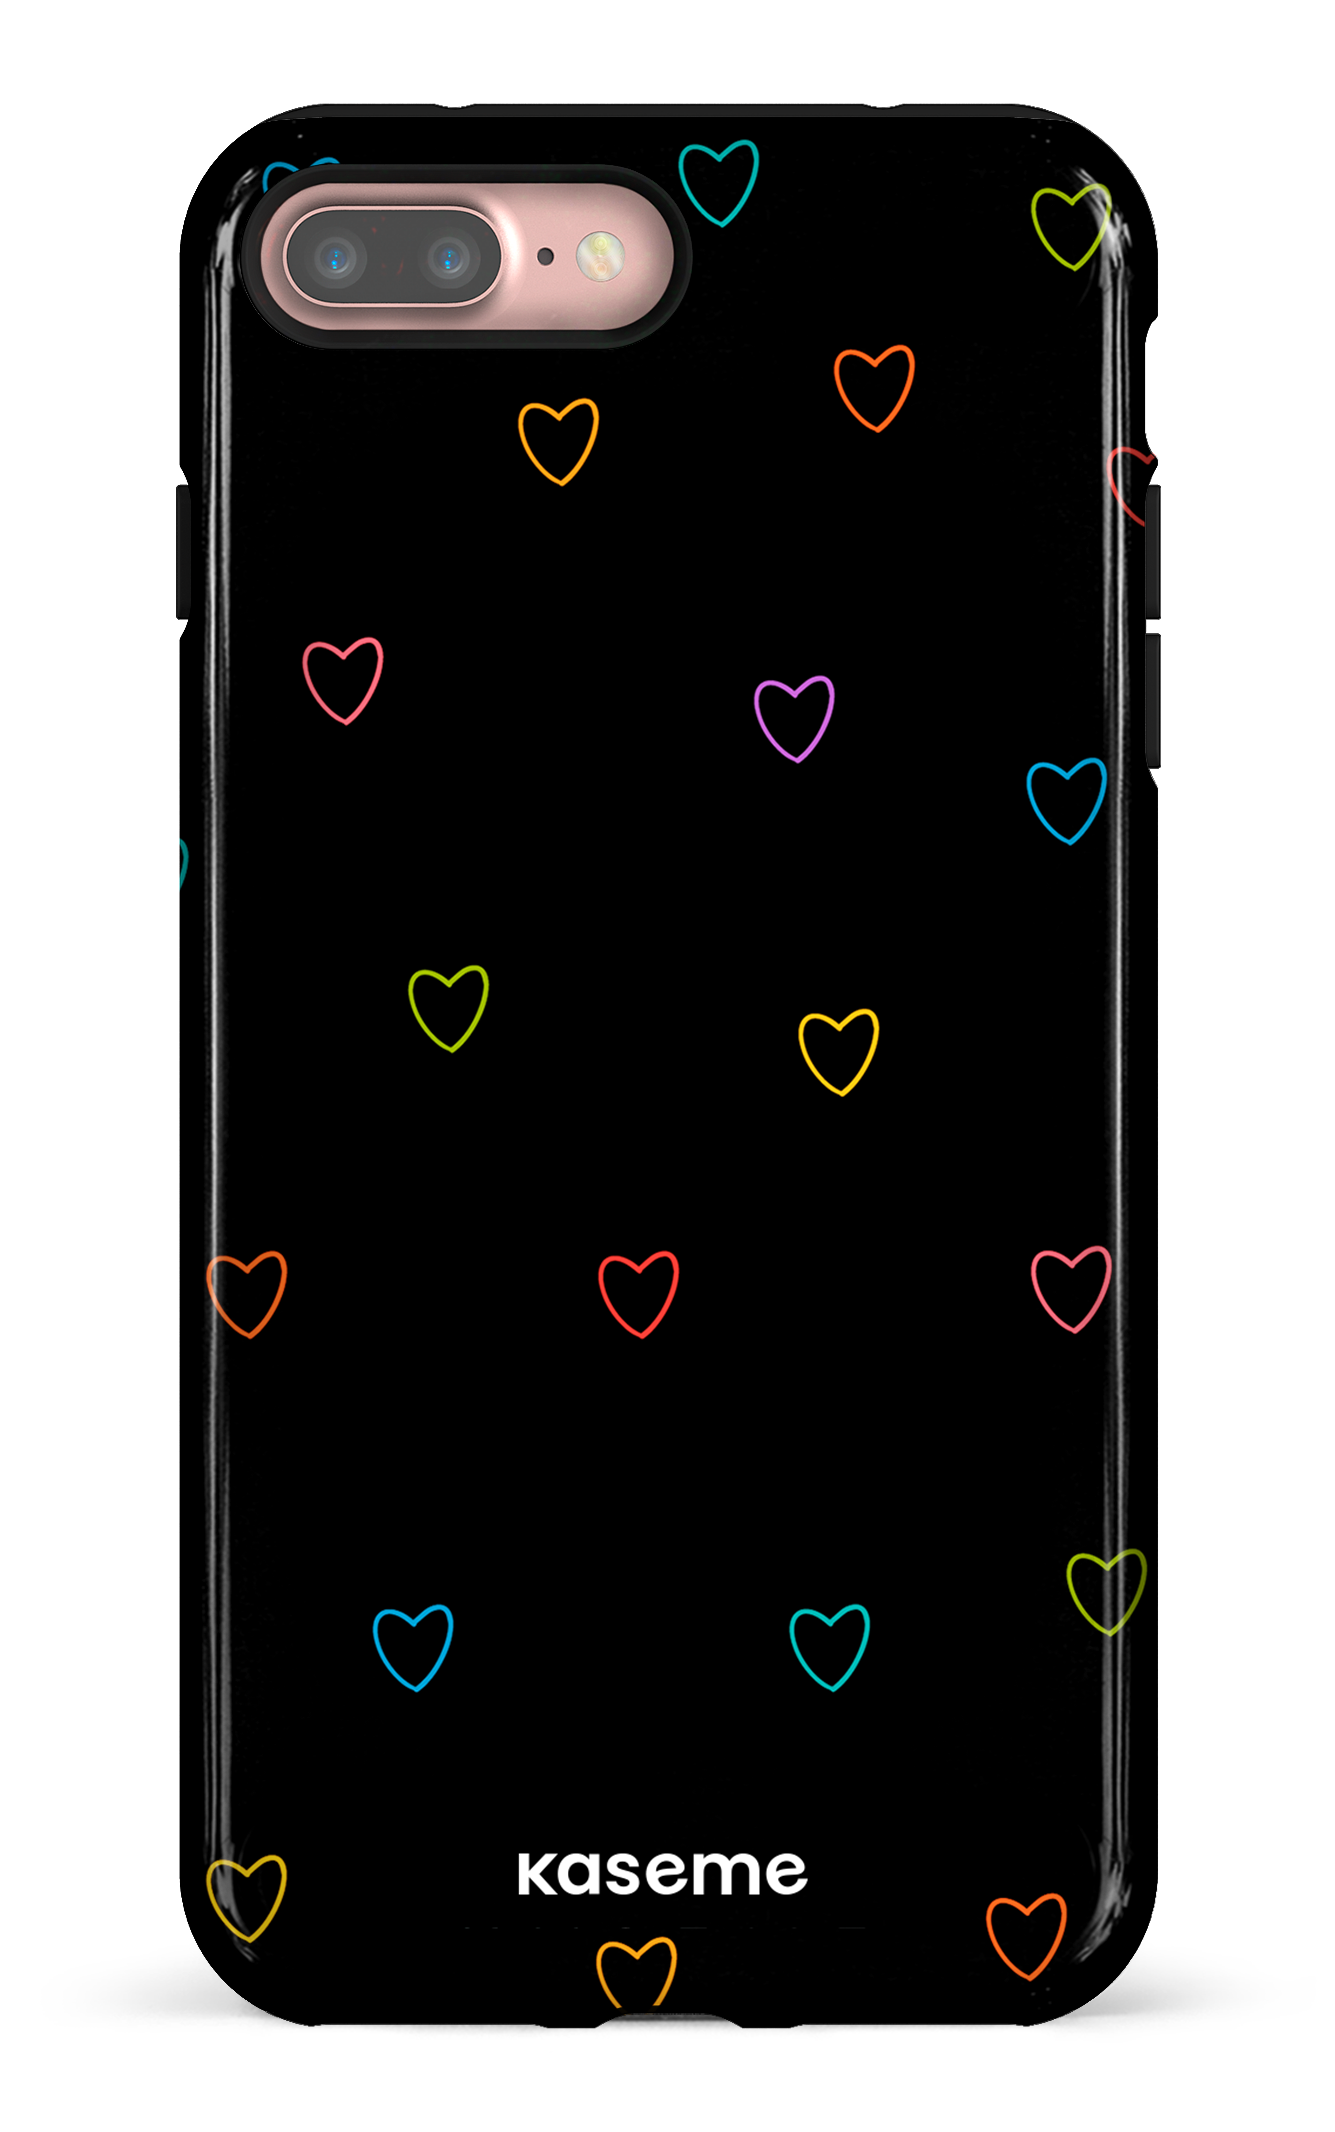 Love Wins - iPhone 7 Plus